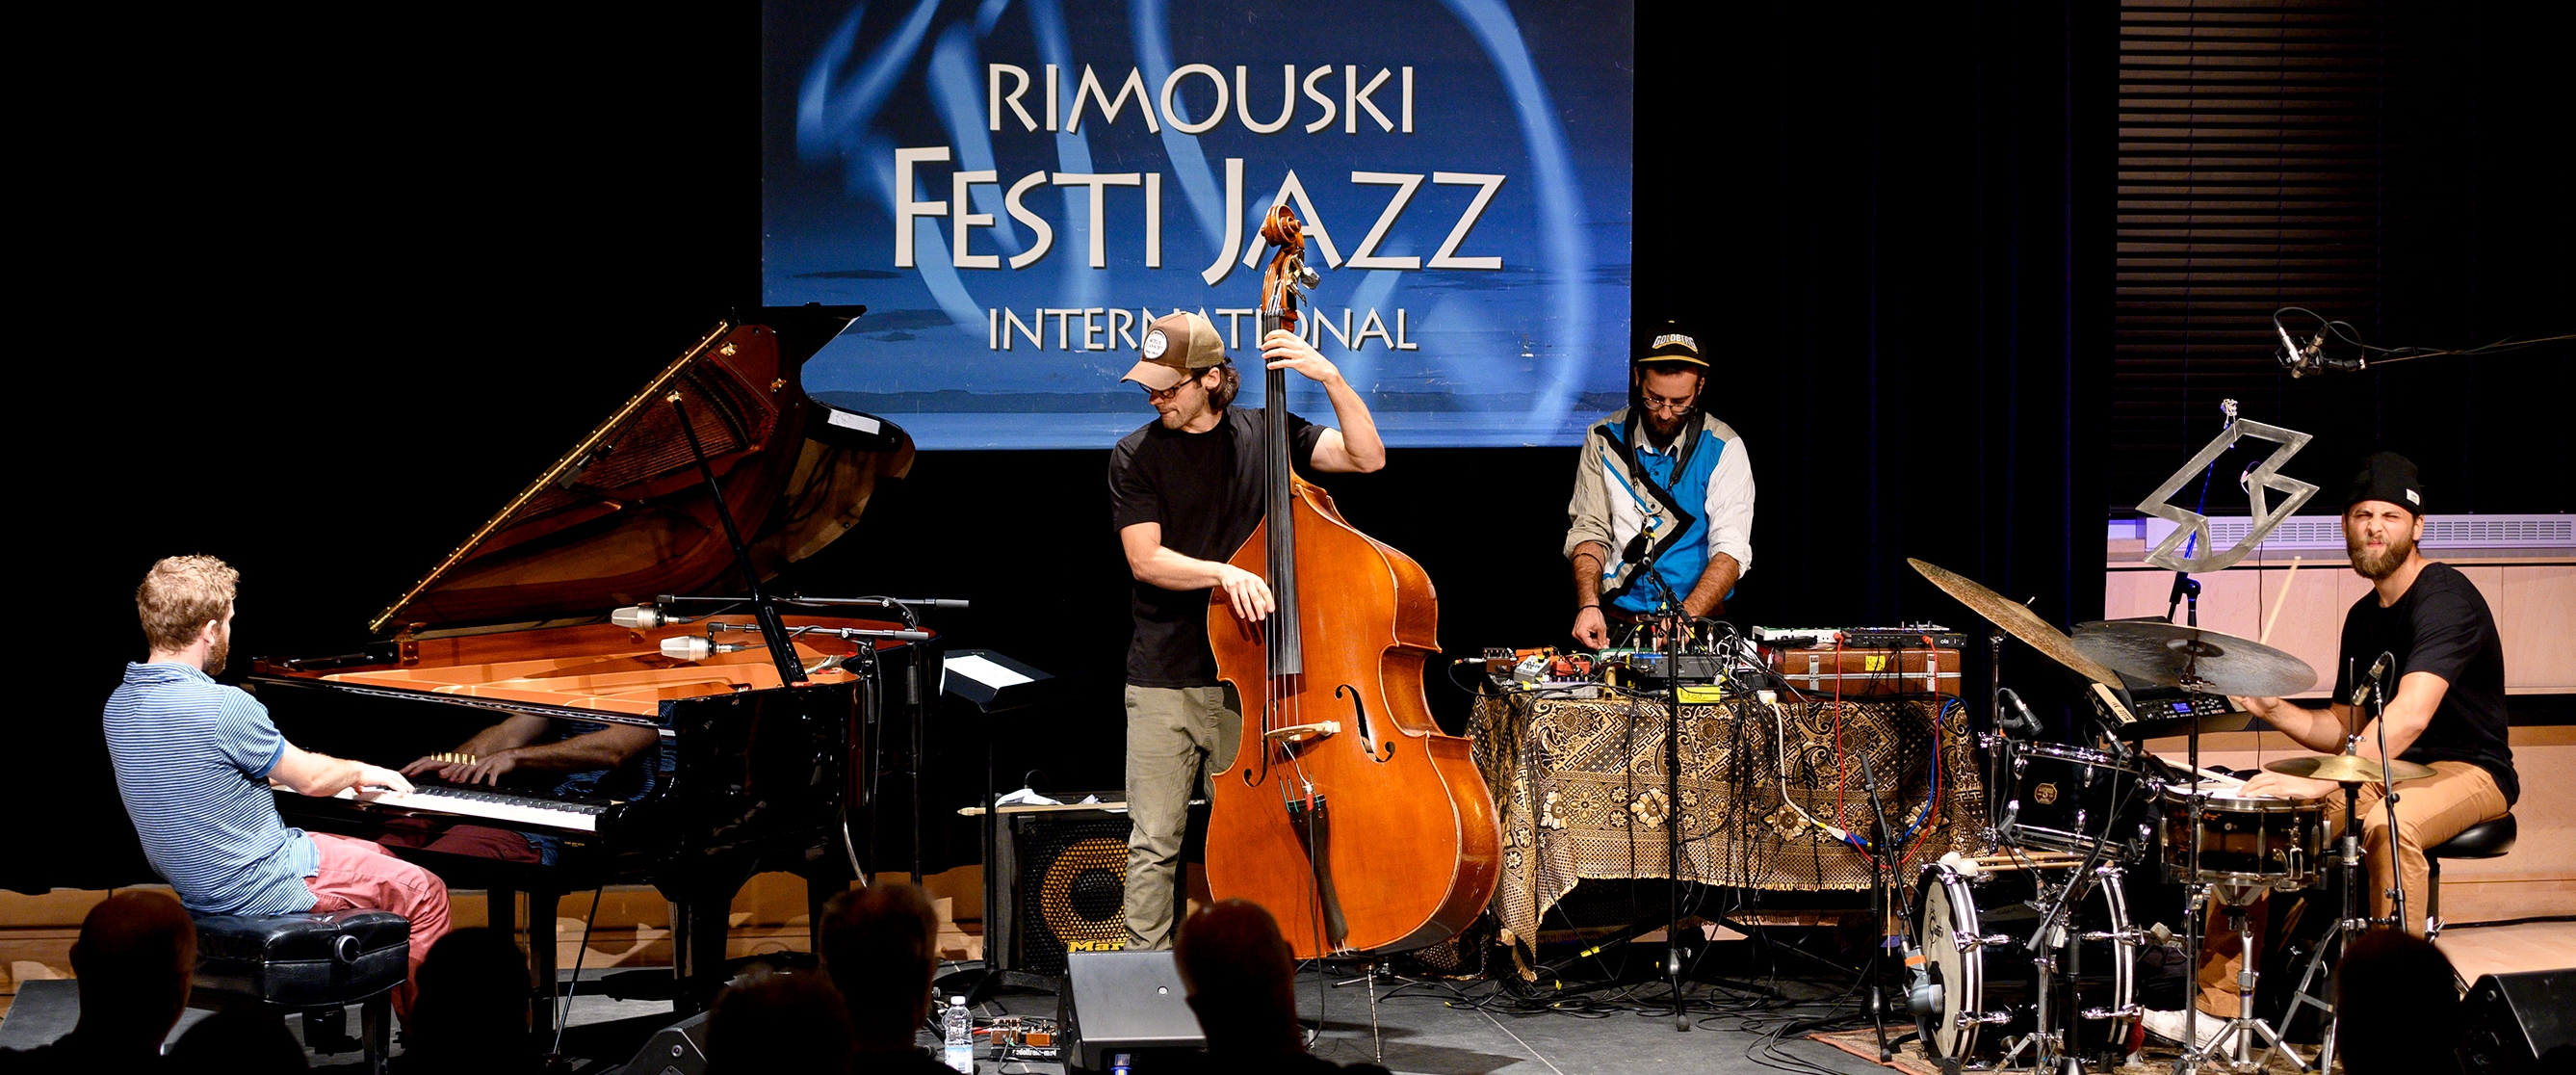 Event Rimouski Festi Jazz International Home Québec maritime